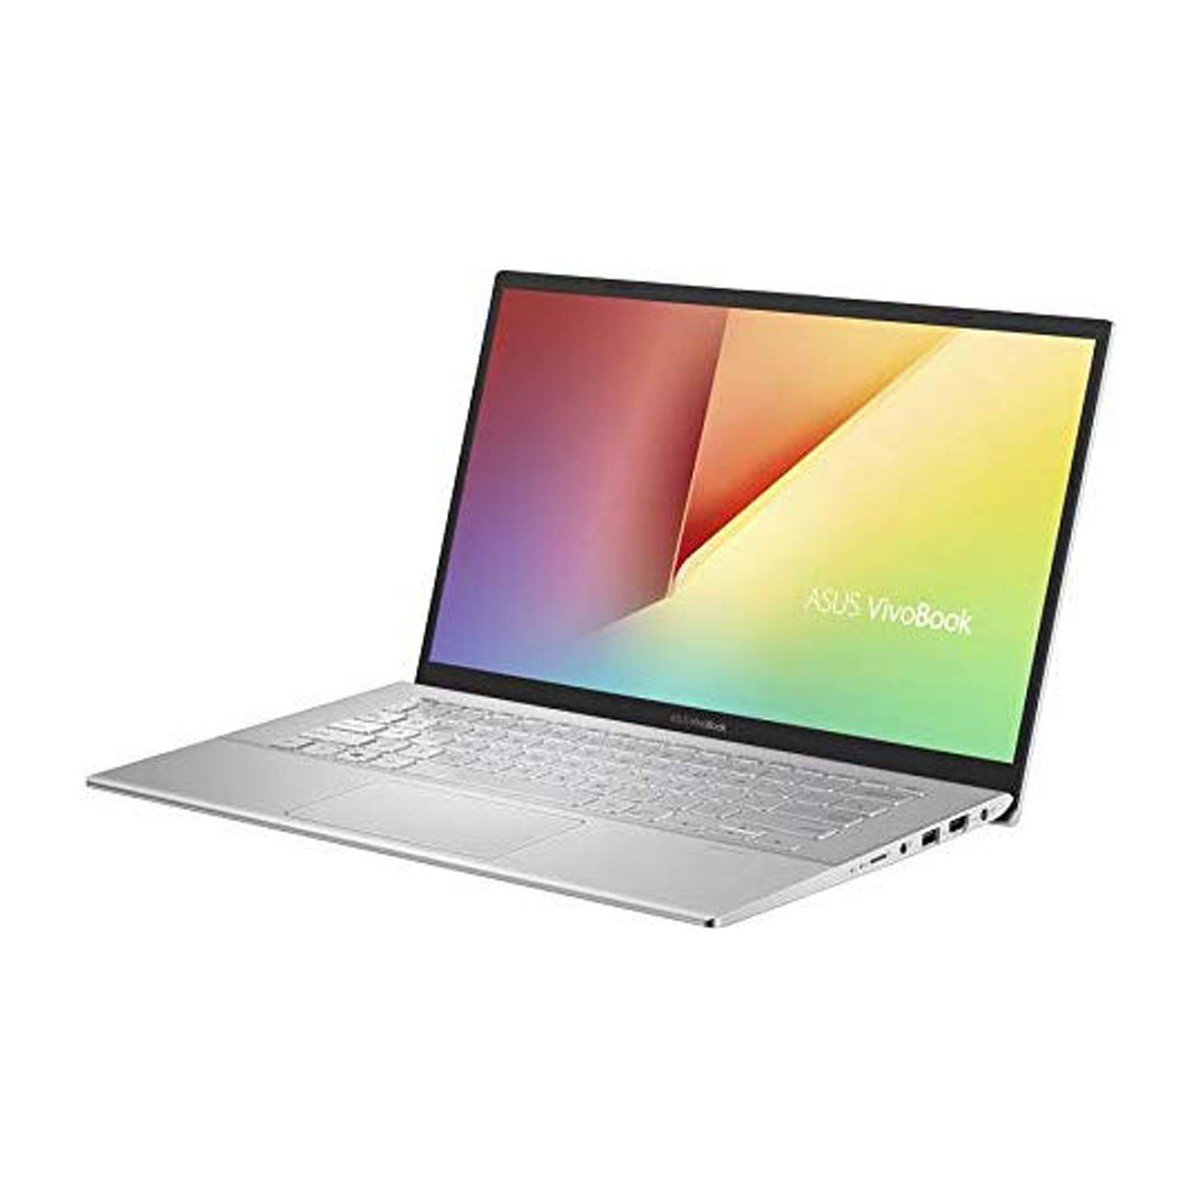 Asus VivoBook 14 A420UA-EK147T Laptop (Transparent Silver) - Intel i3-7020U 2.3 GHz, 4 GB RAM, 128 GB SSD, Integrated Intel UHD Graphics 620, 14 inches LED, Windows 10, Eng-Arb-KB